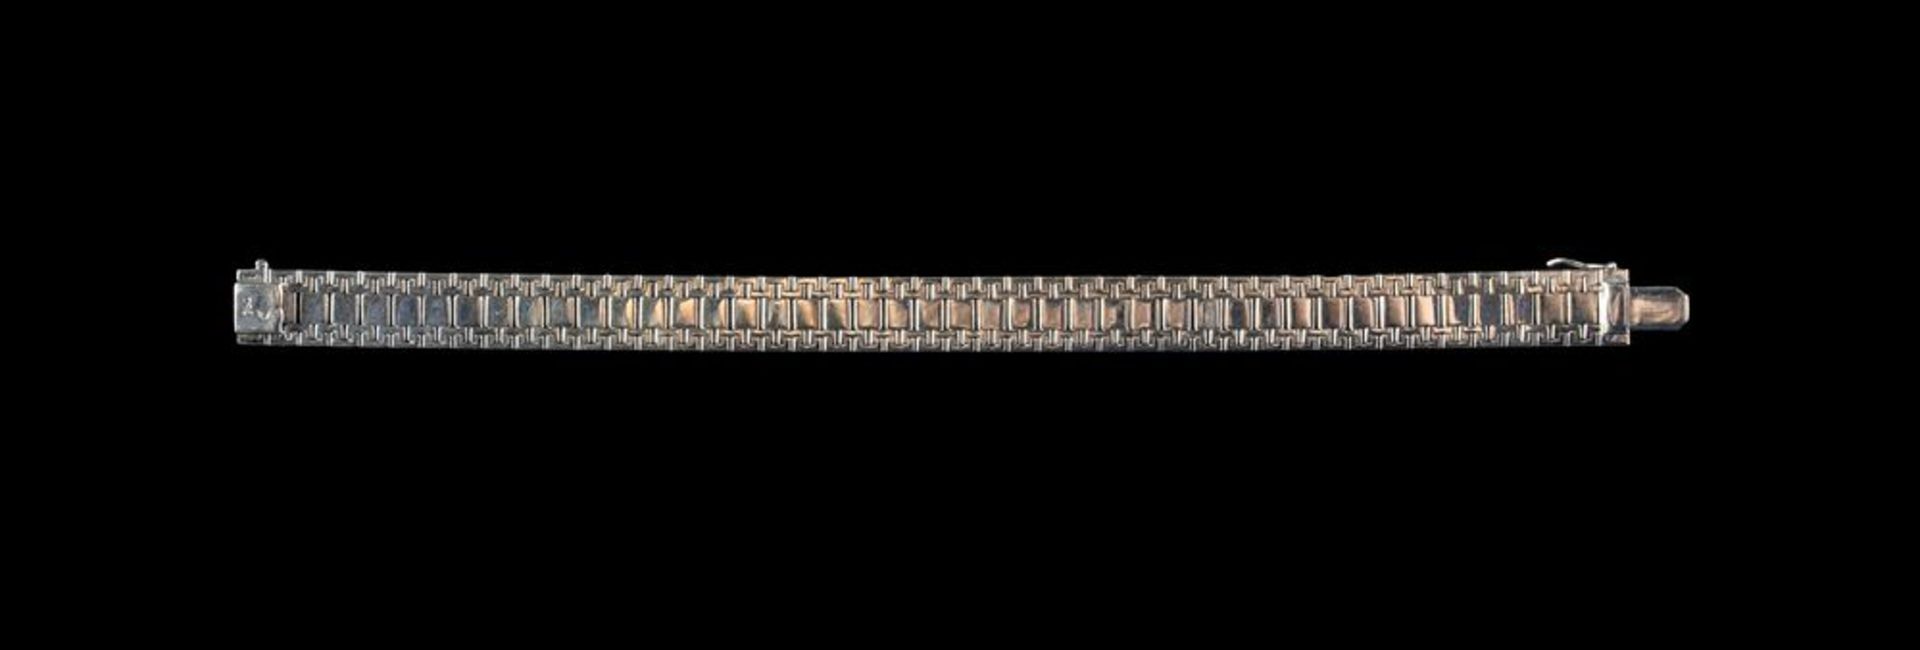 BRACCIALE IN ORO BIANCO CON ZAFFIRI
Prestigioso bracciale in oro bianco 18k con zaffiri taglio brill - Bild 2 aus 4